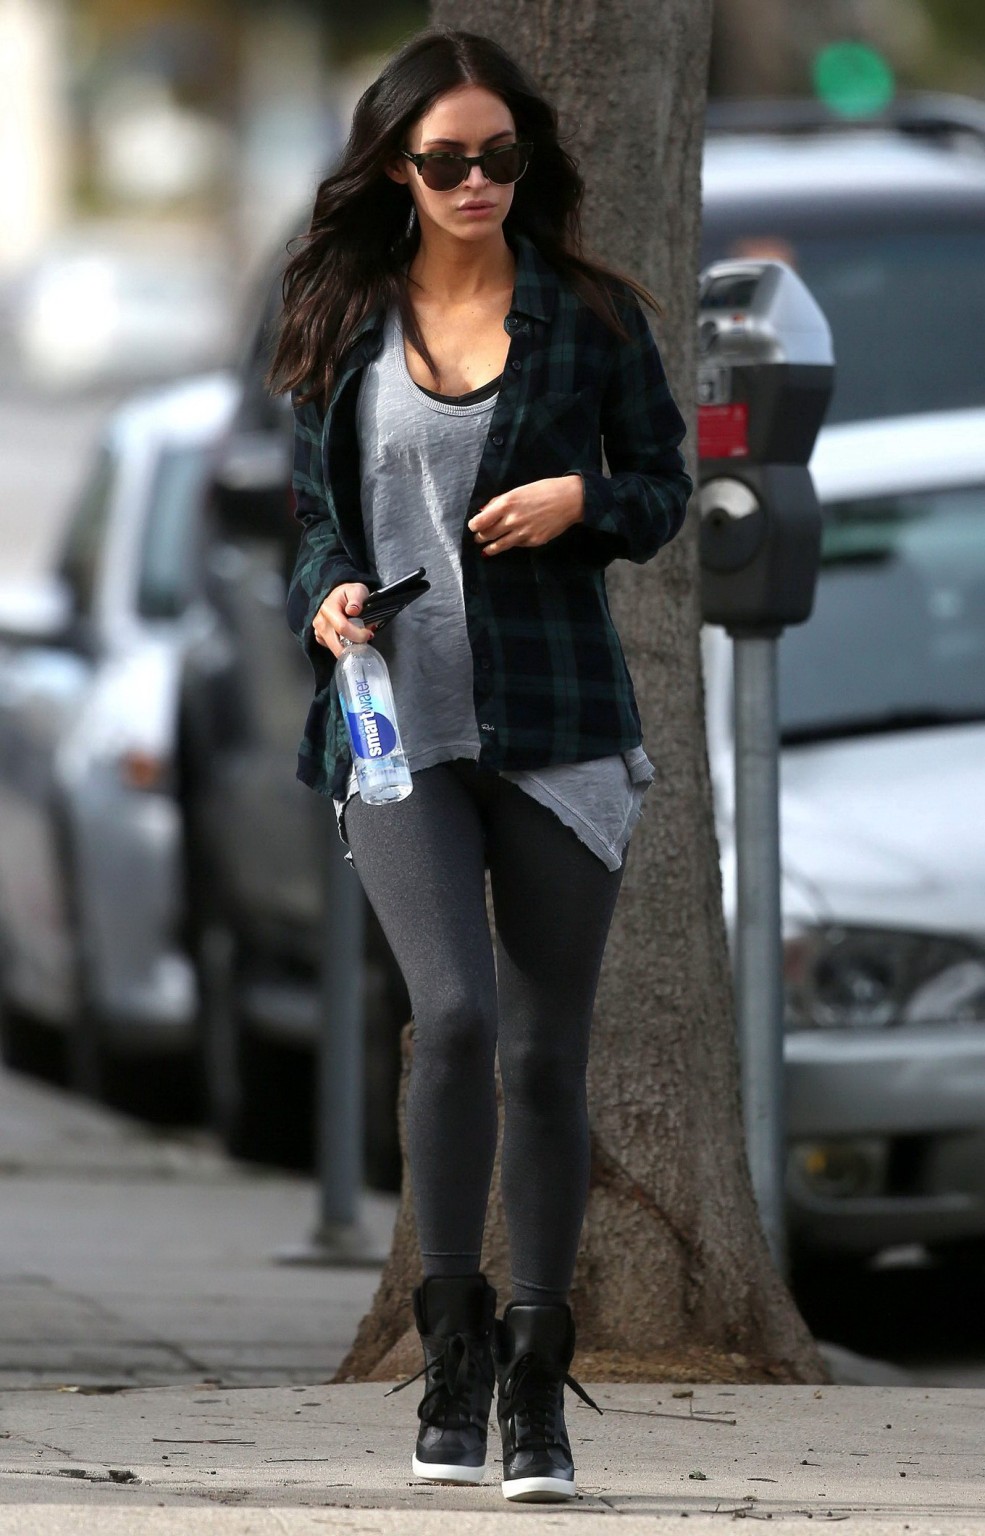 Megan Fox leggy wearing gray tights out in LA